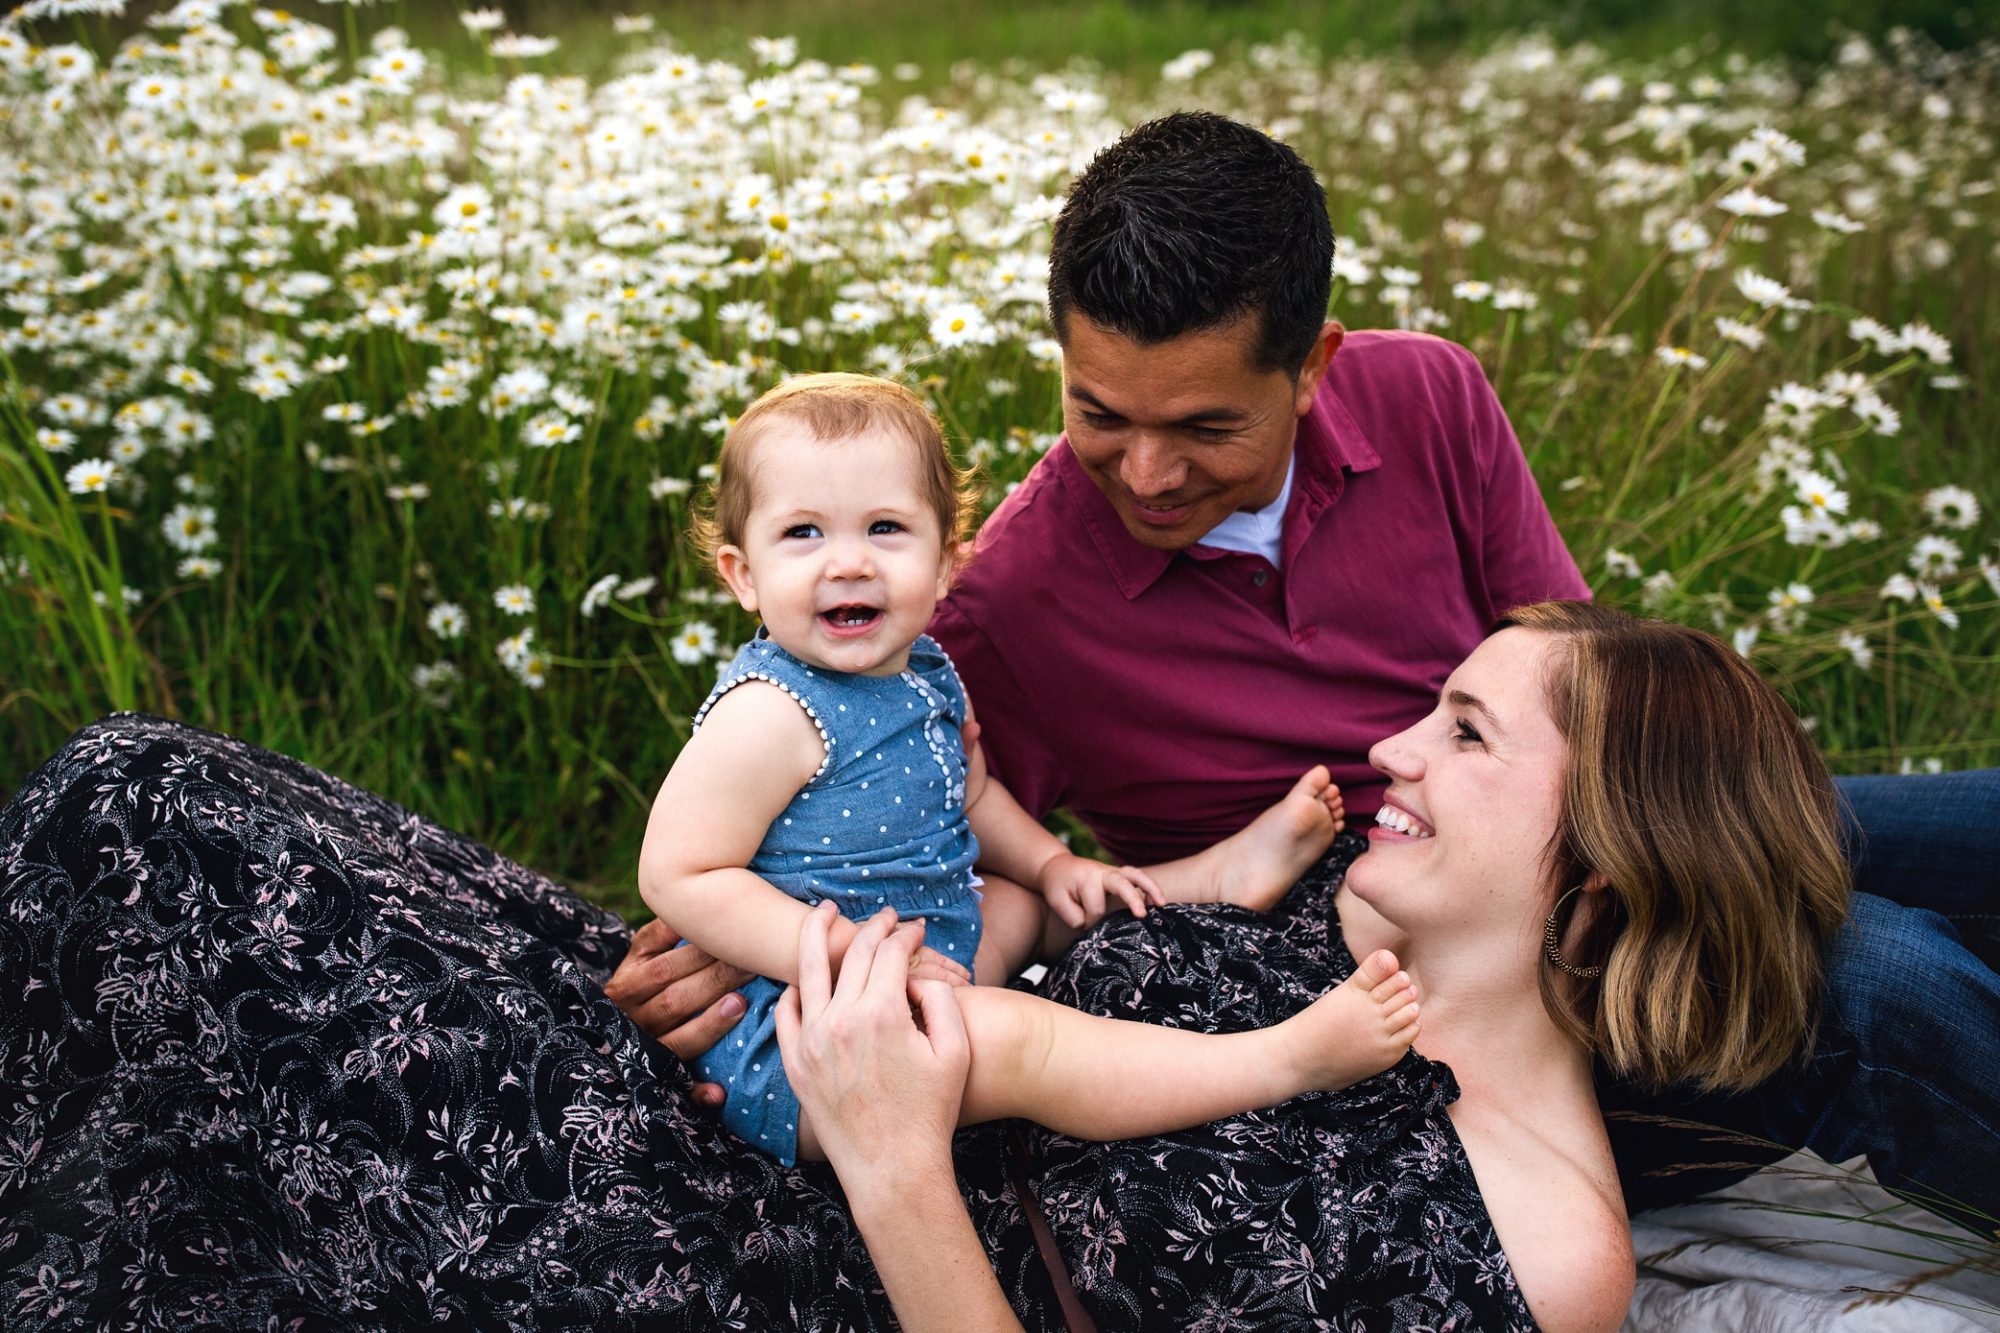 tacoma family photographer | family photography puyallup